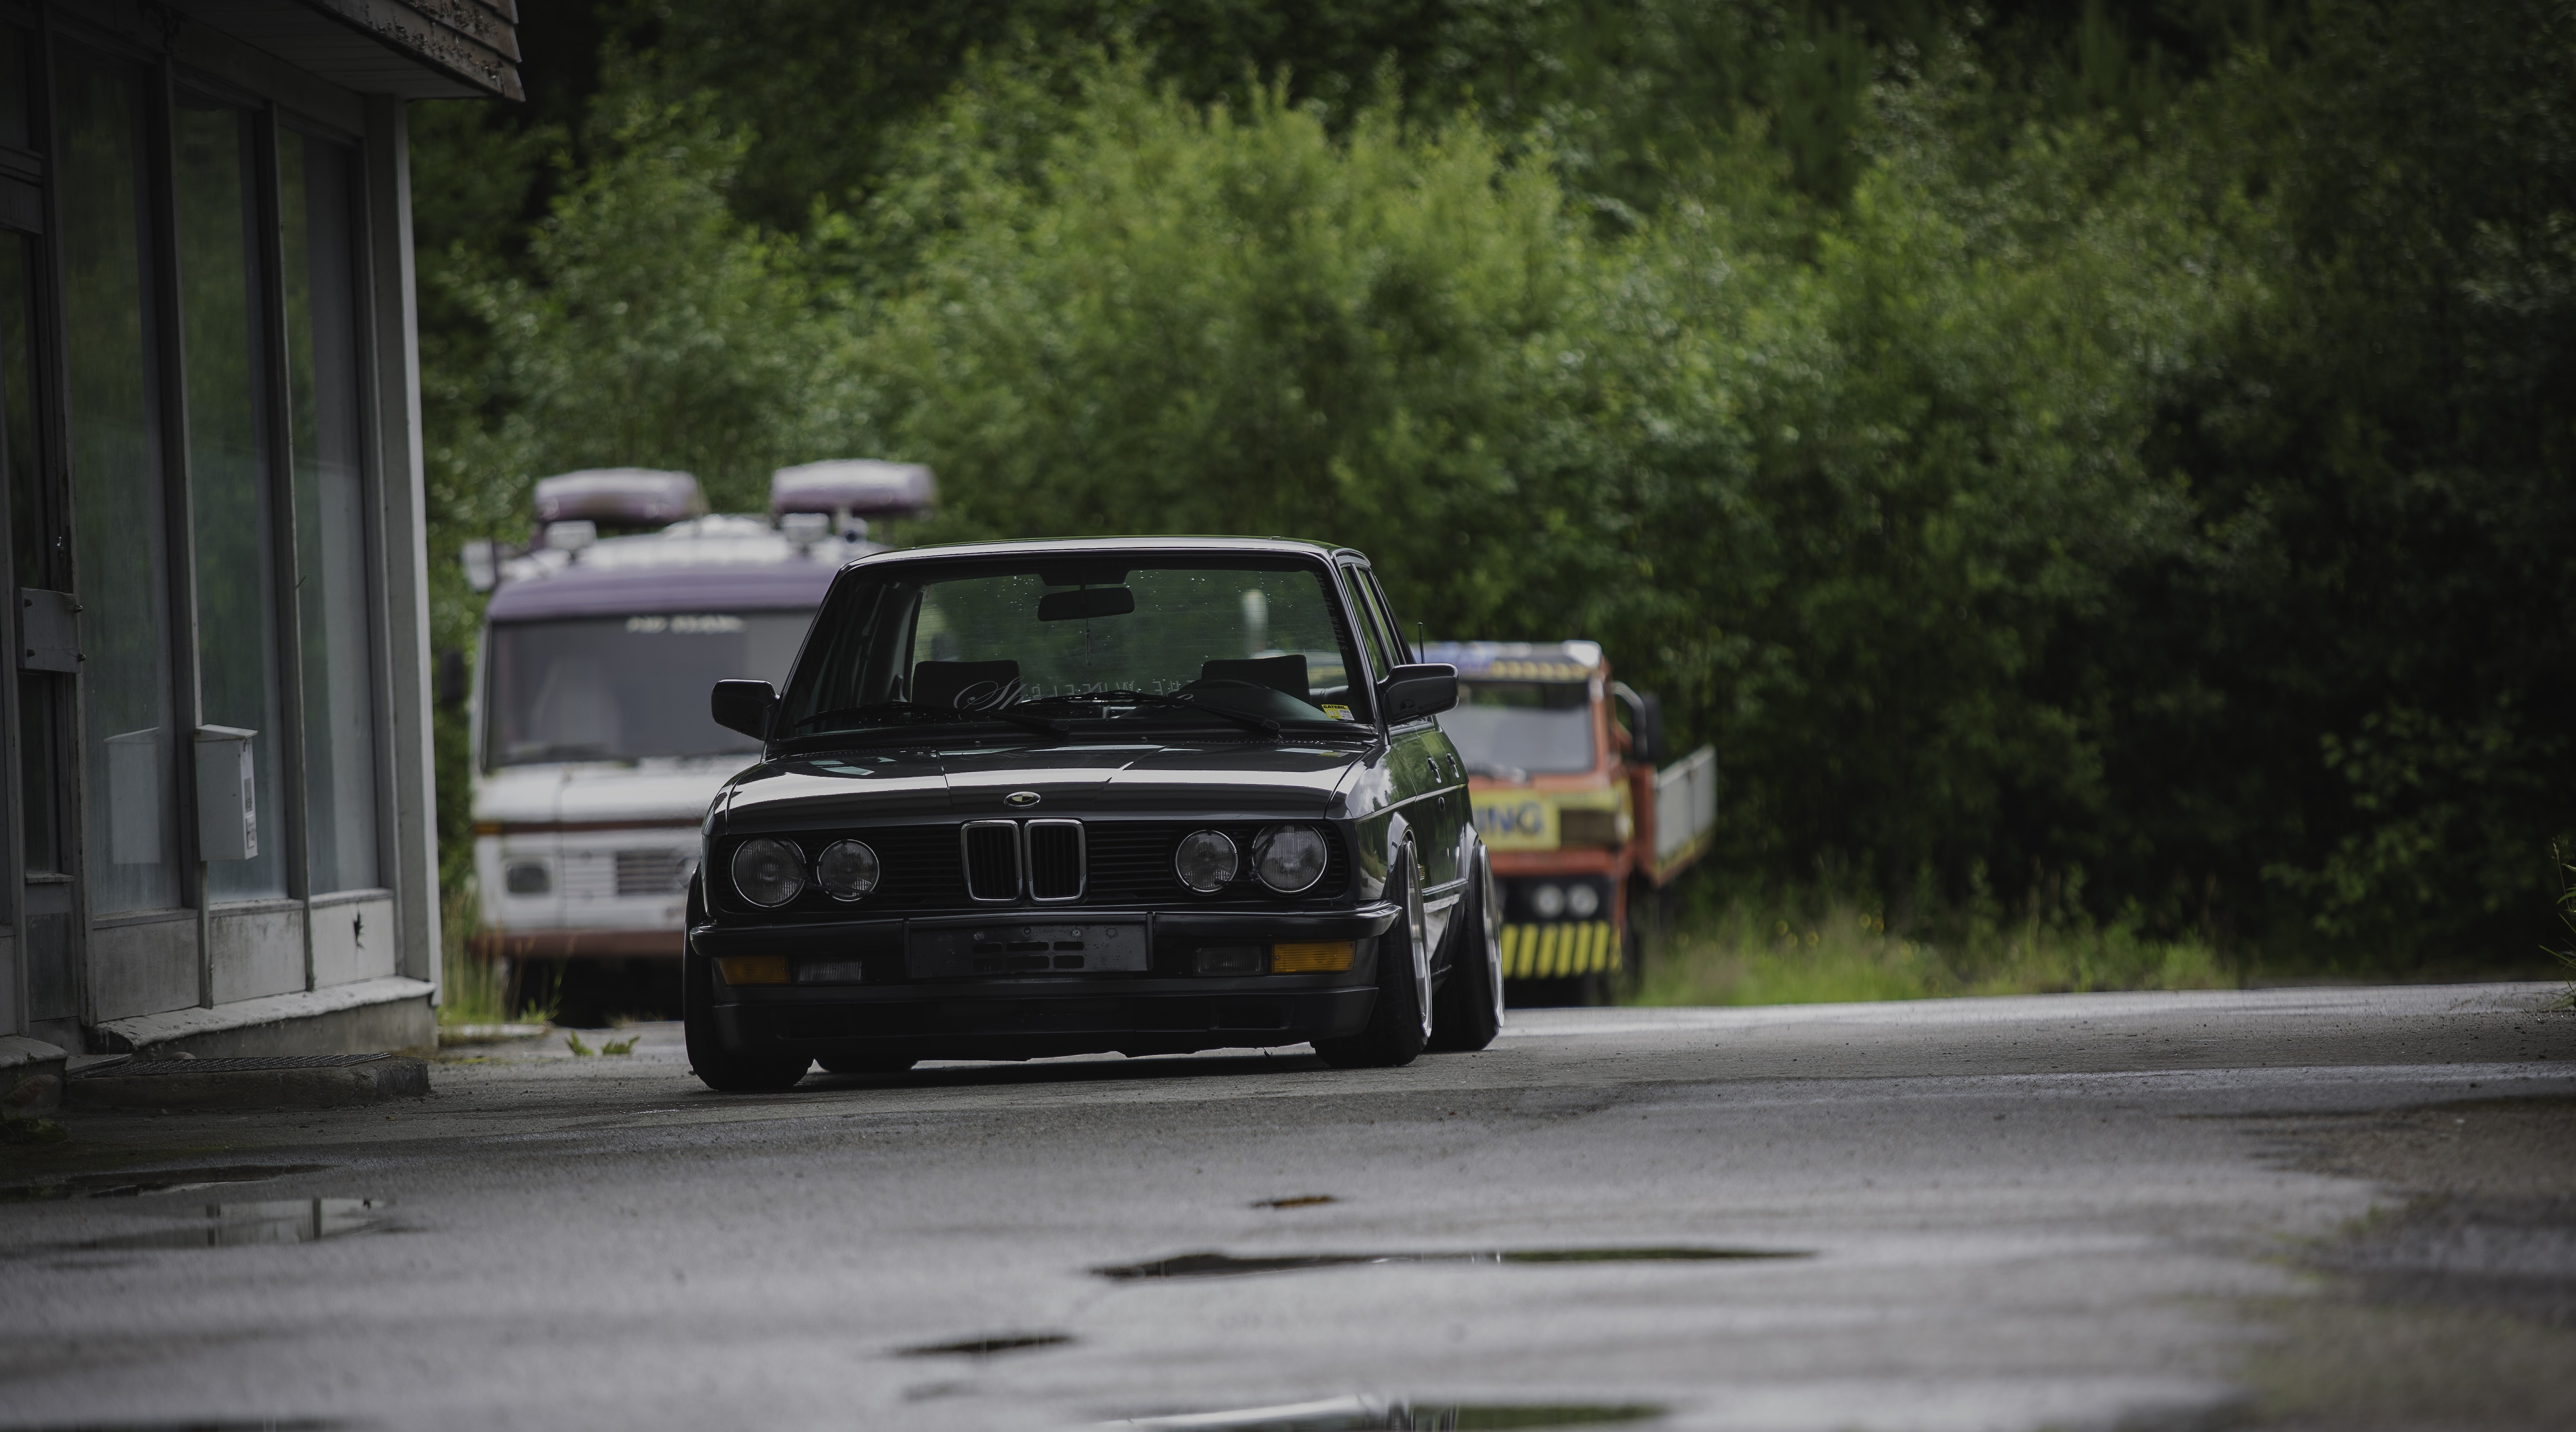 BMW E28, Stance, Stanceworks, Low, Norway, Summer, Rain Wallpaper